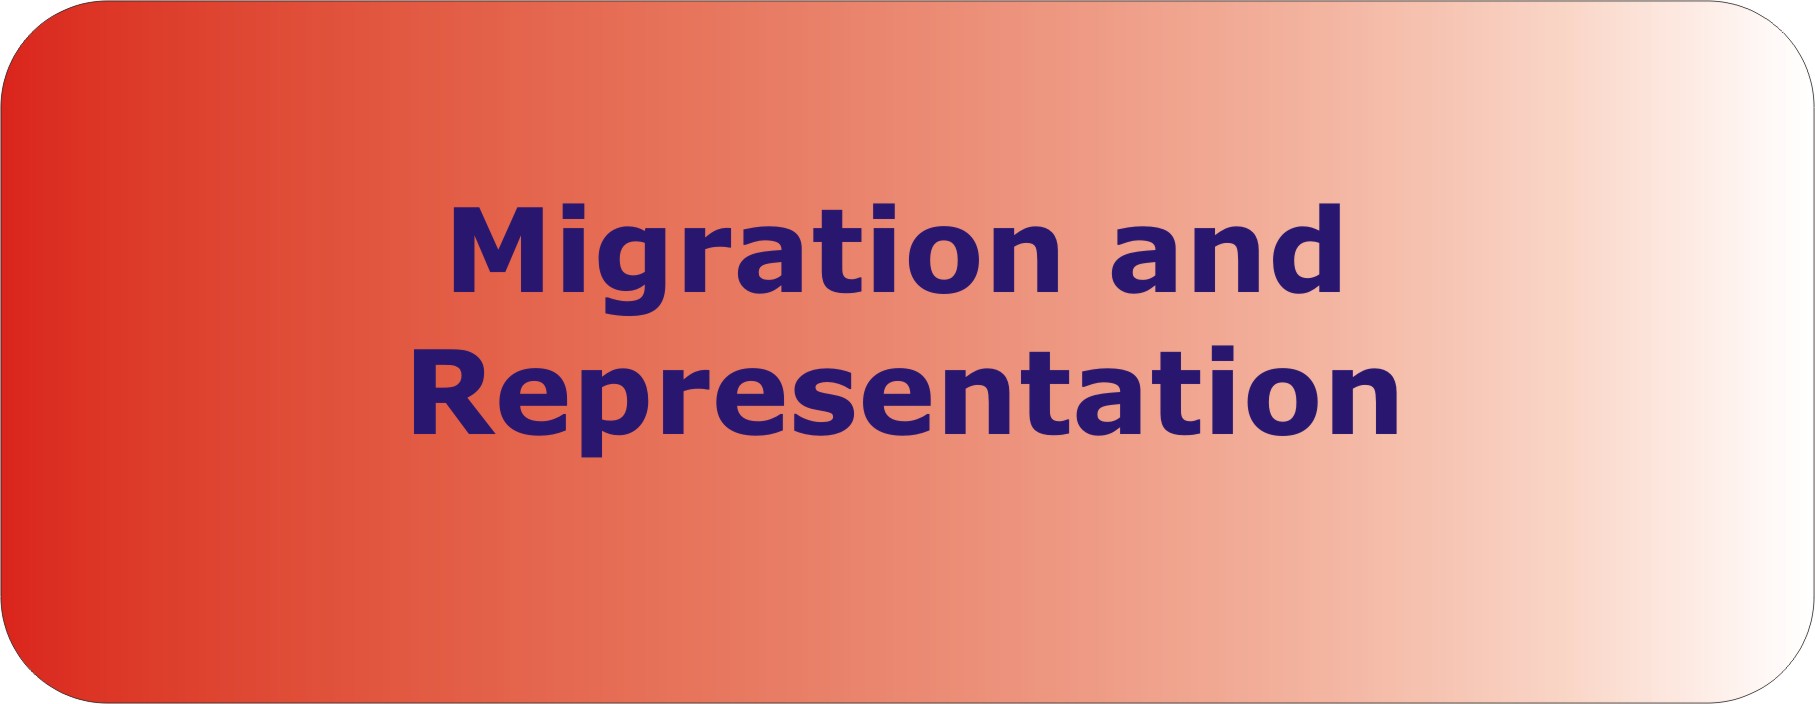 Migration and Representation